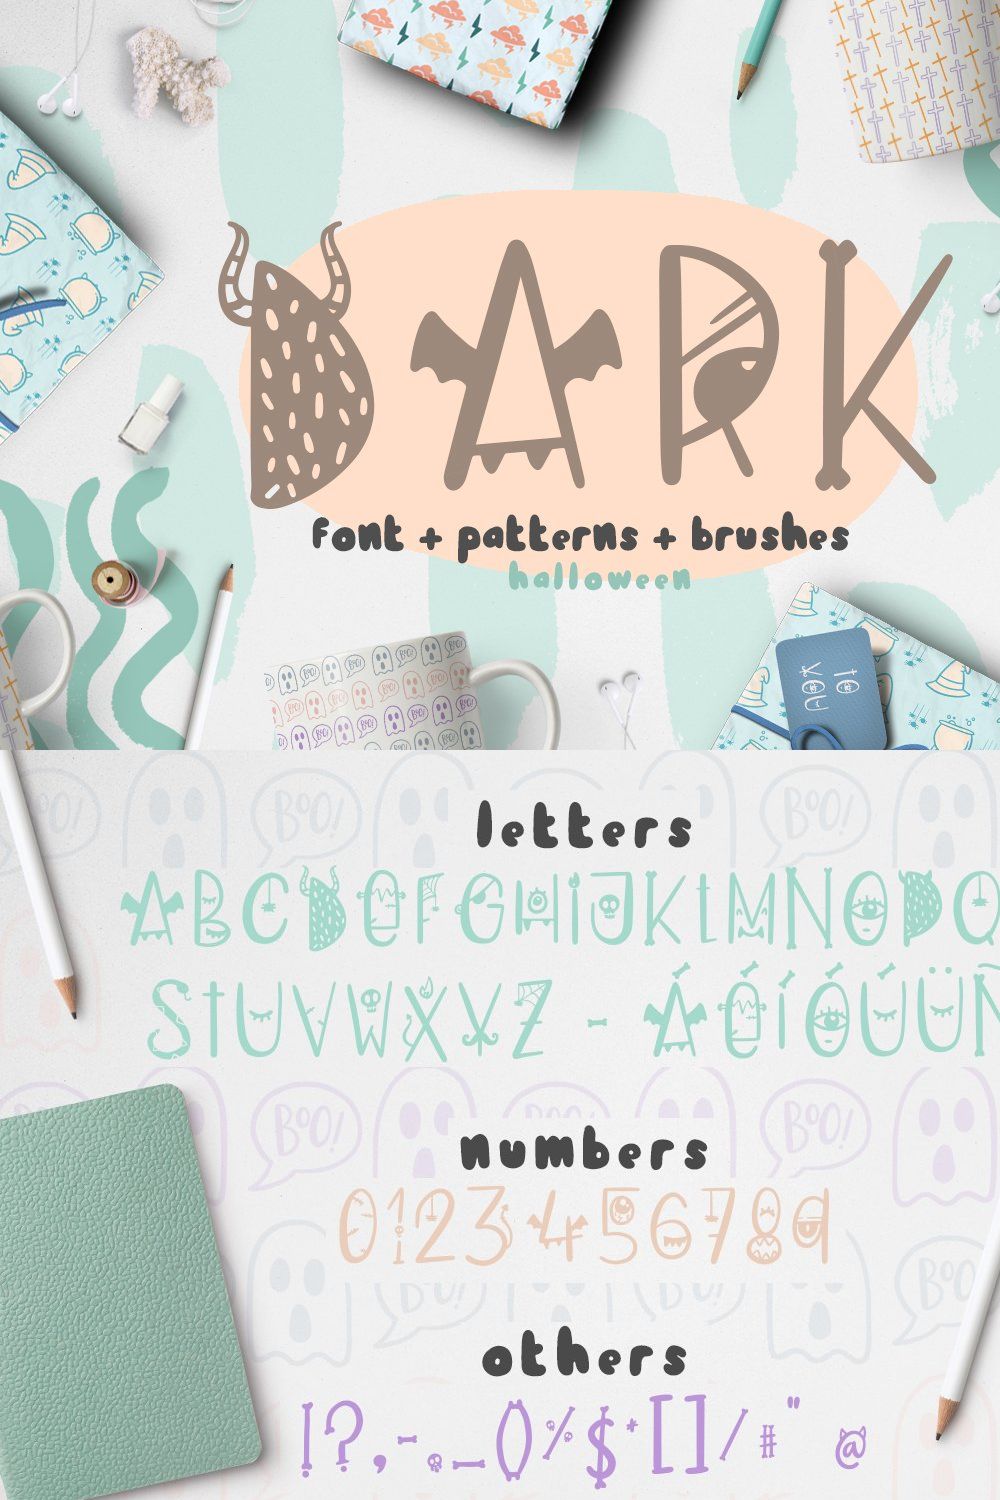 Dark font + patterns, brushes, MORE! pinterest preview image.